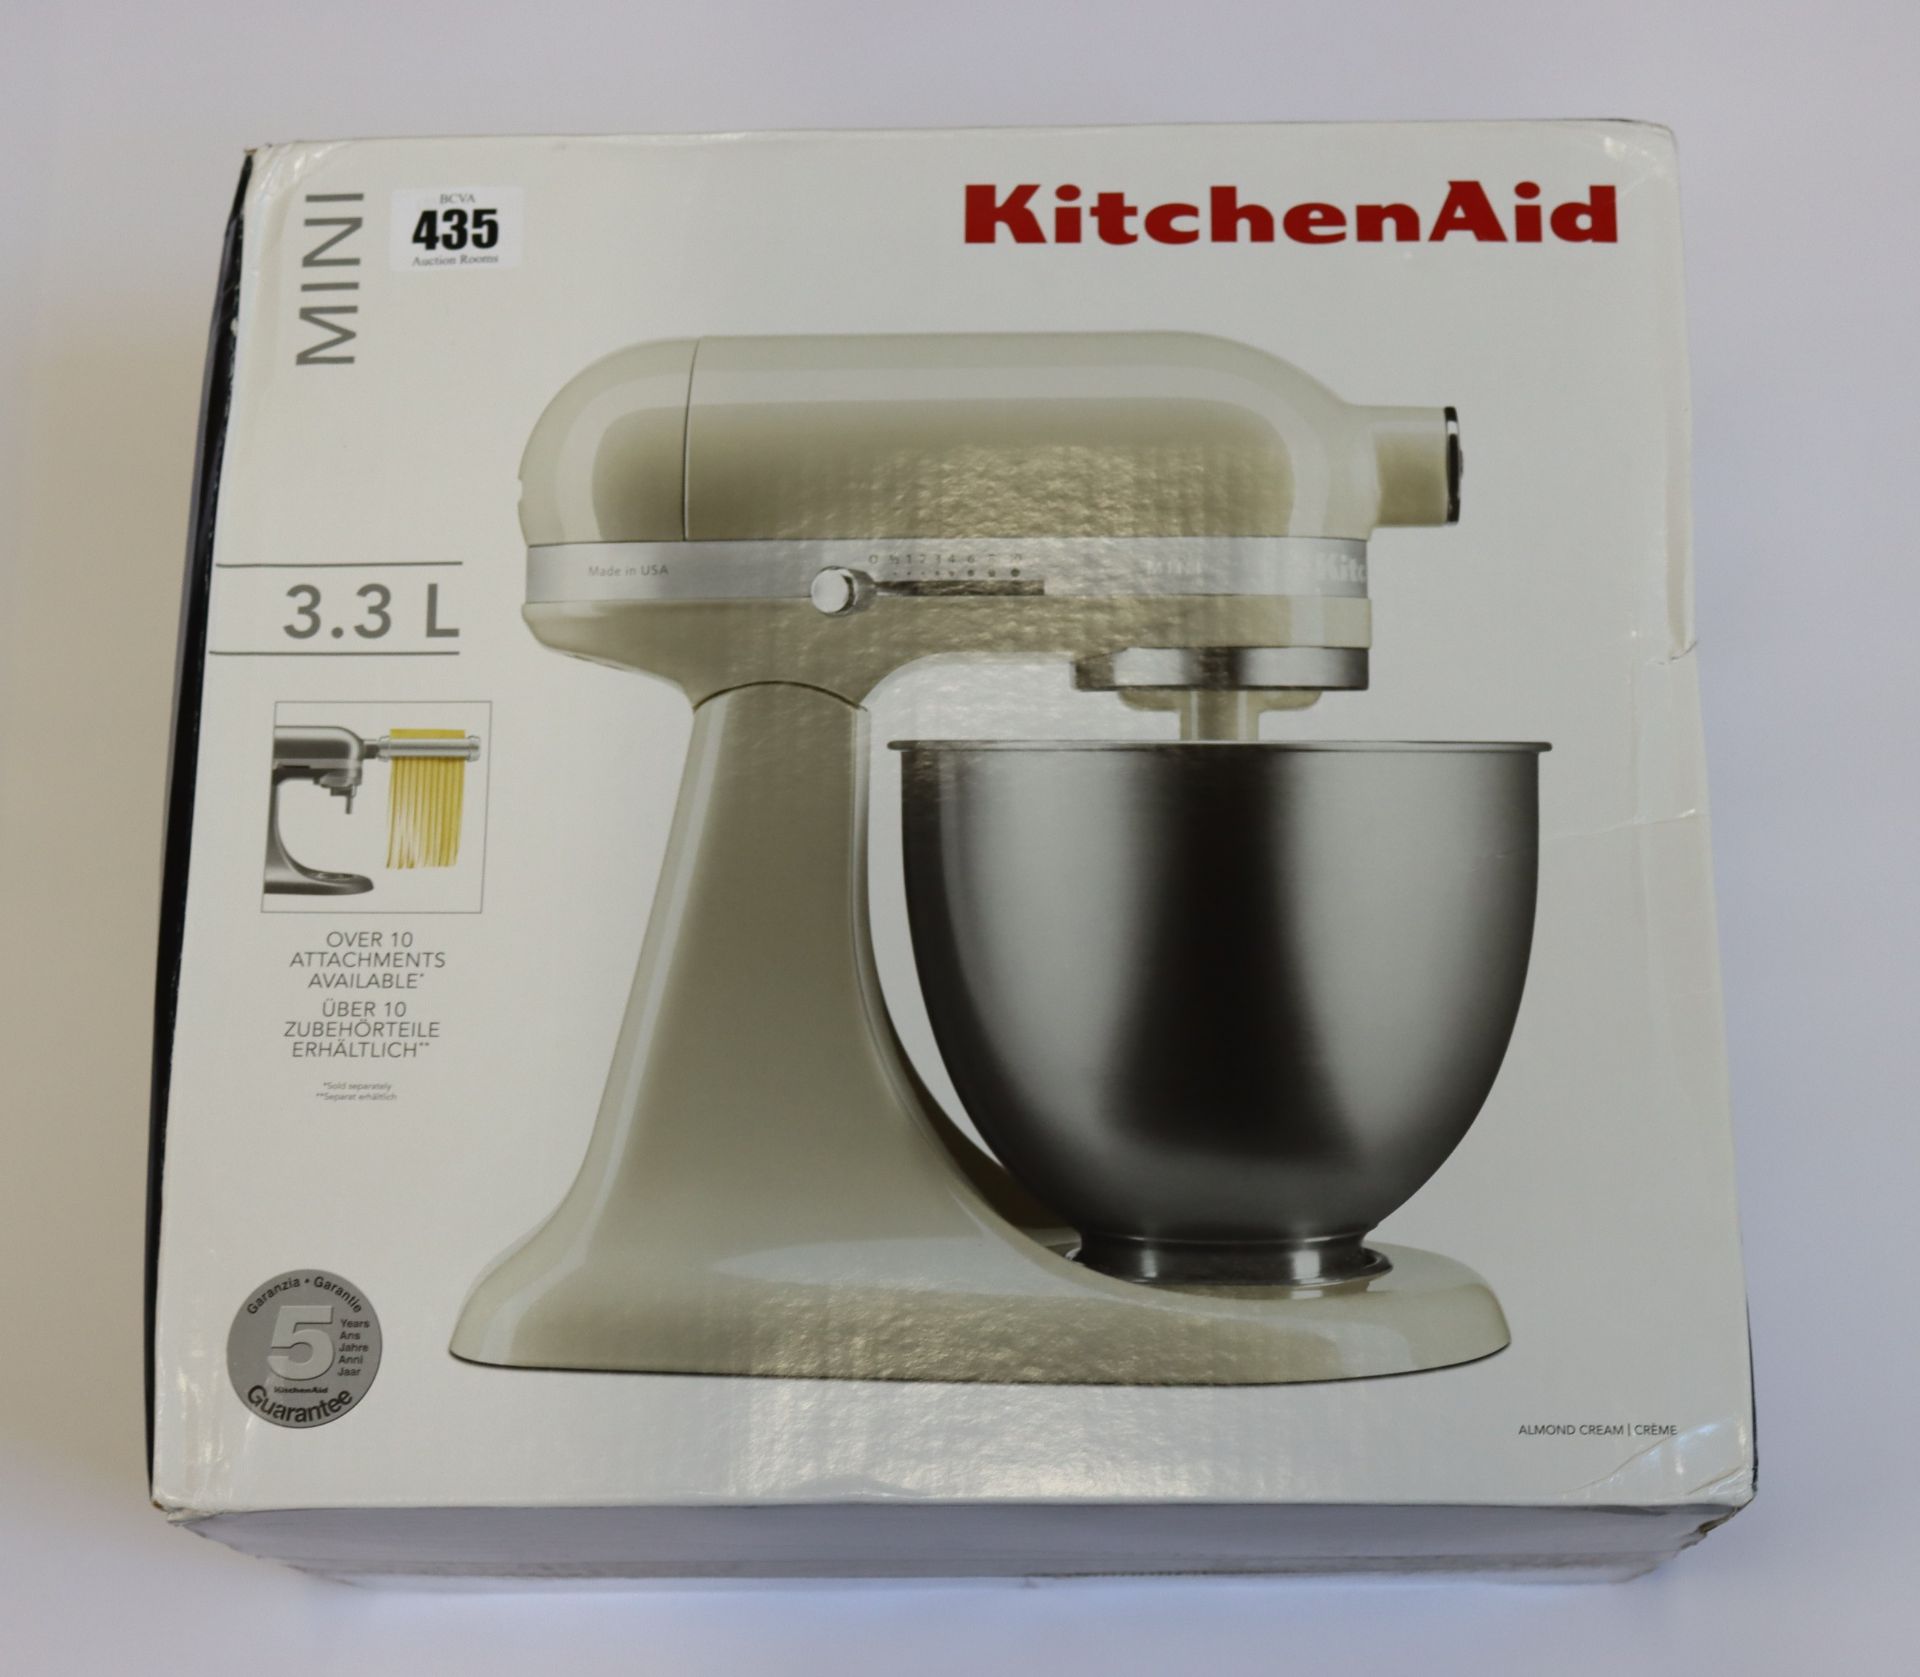 An as new KitchenAid 3.3L mini mixer in white (some damage to box).